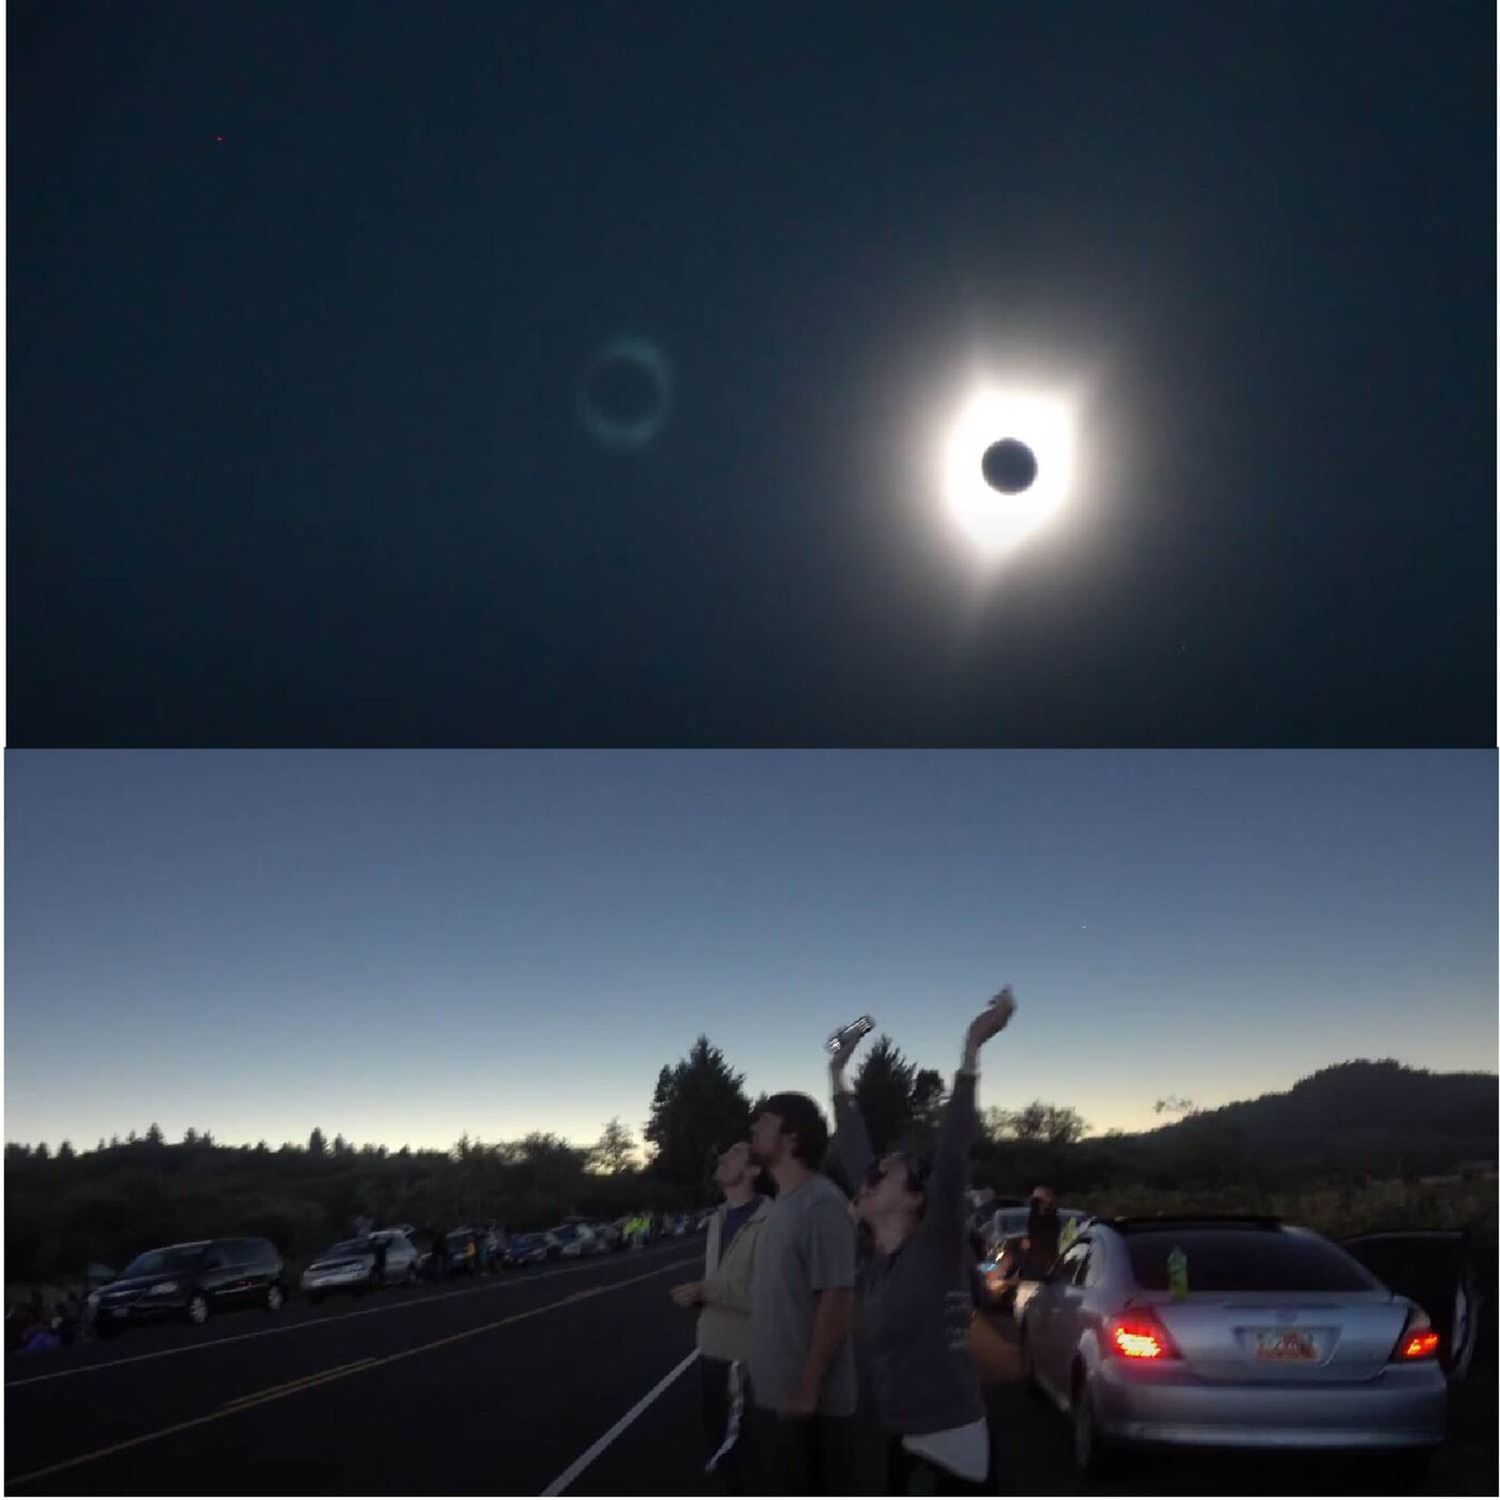 Experiencing a solar eclipse